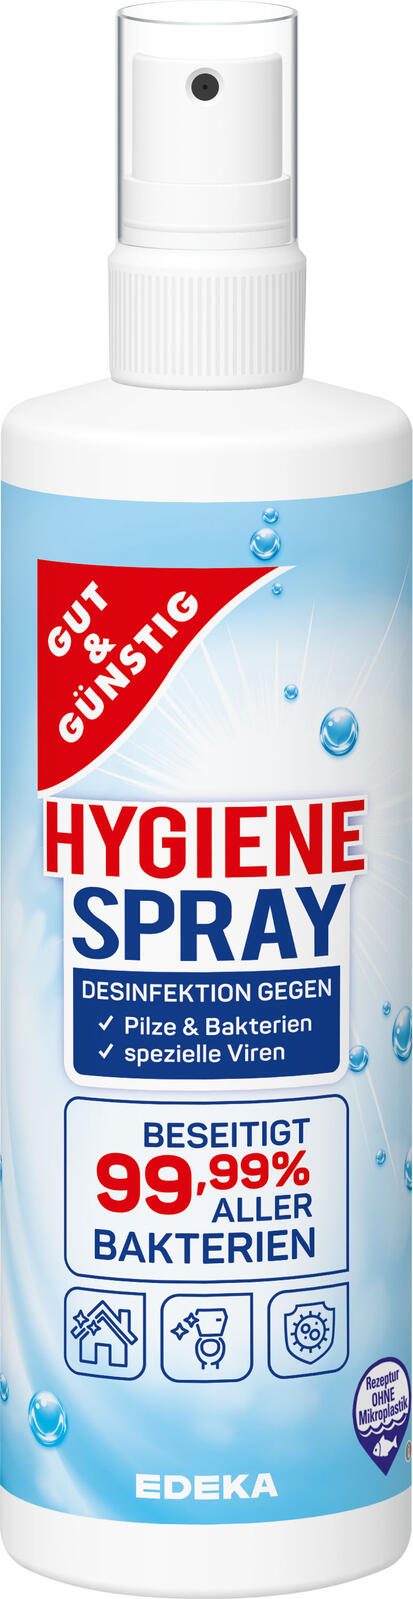 G&G Hygiene Spray 250ml